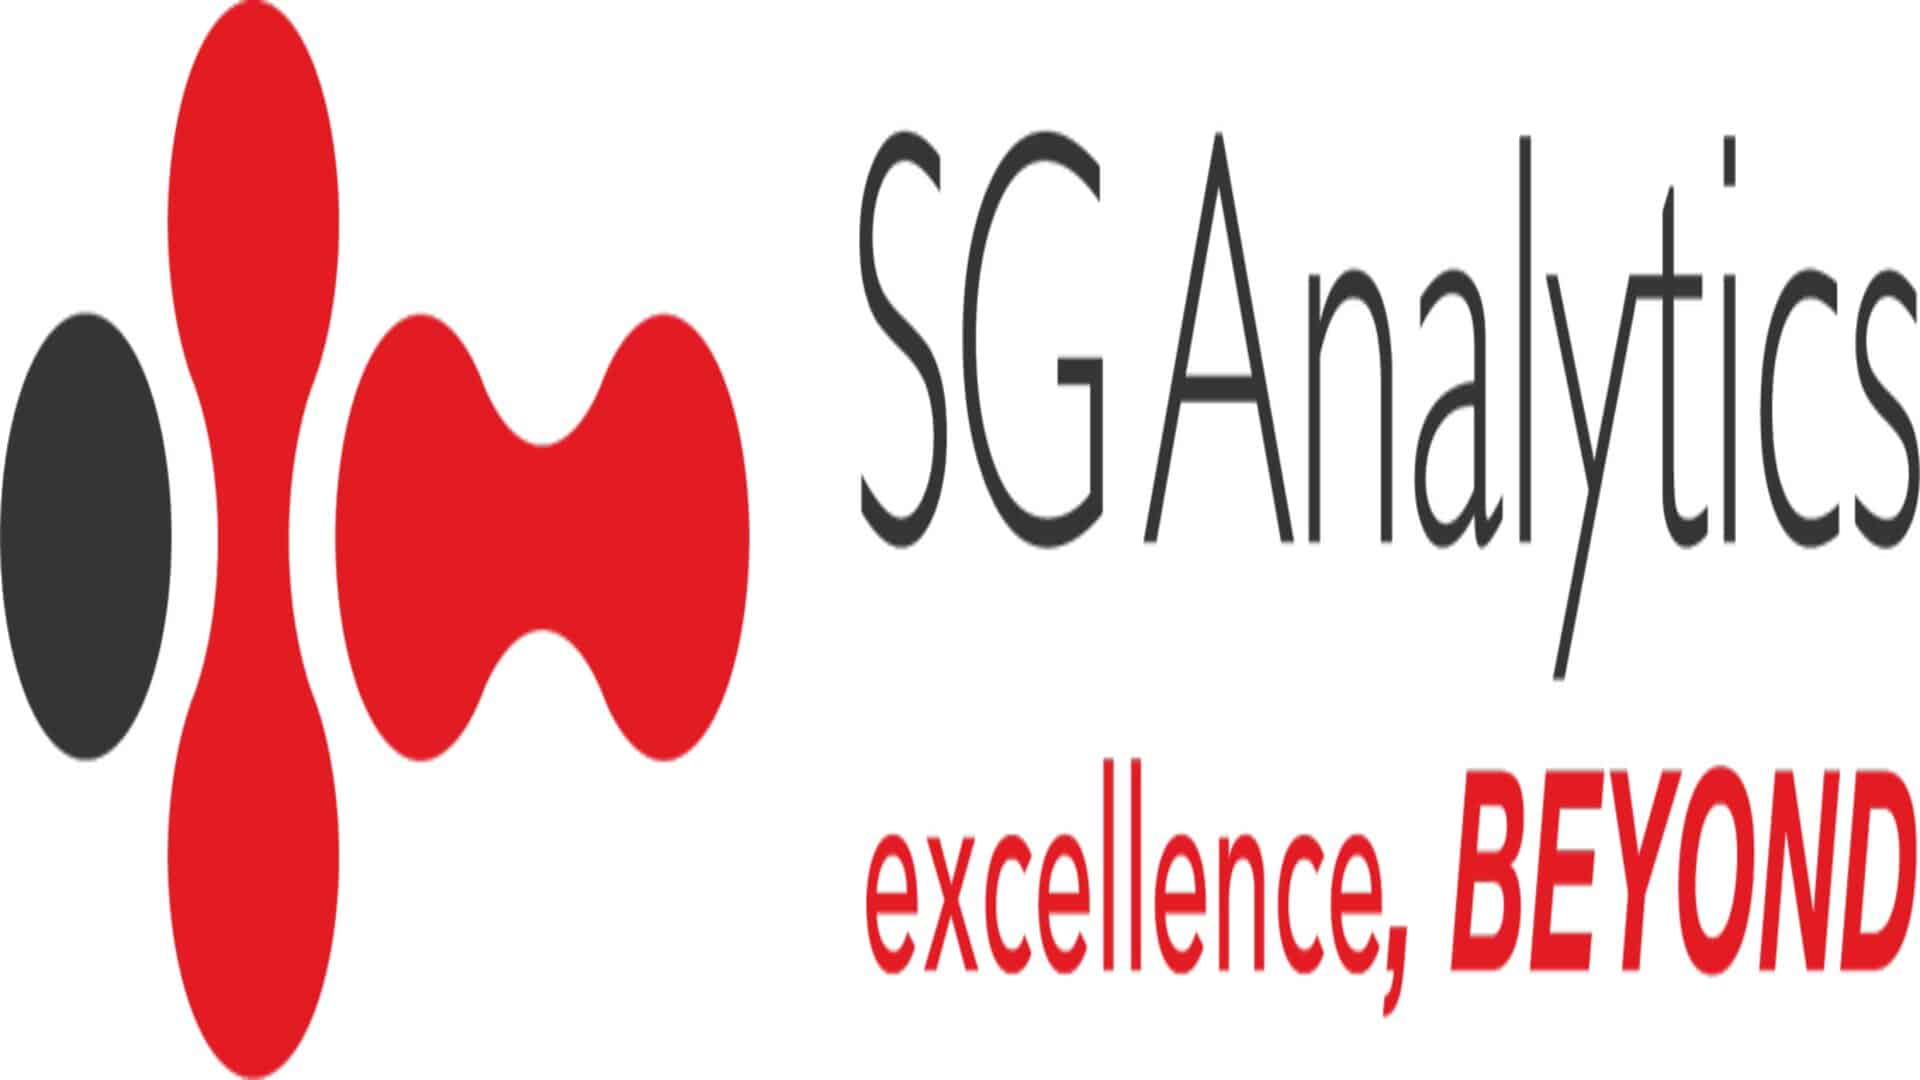 SG Analytics receives GPTW certification in its maiden attempt